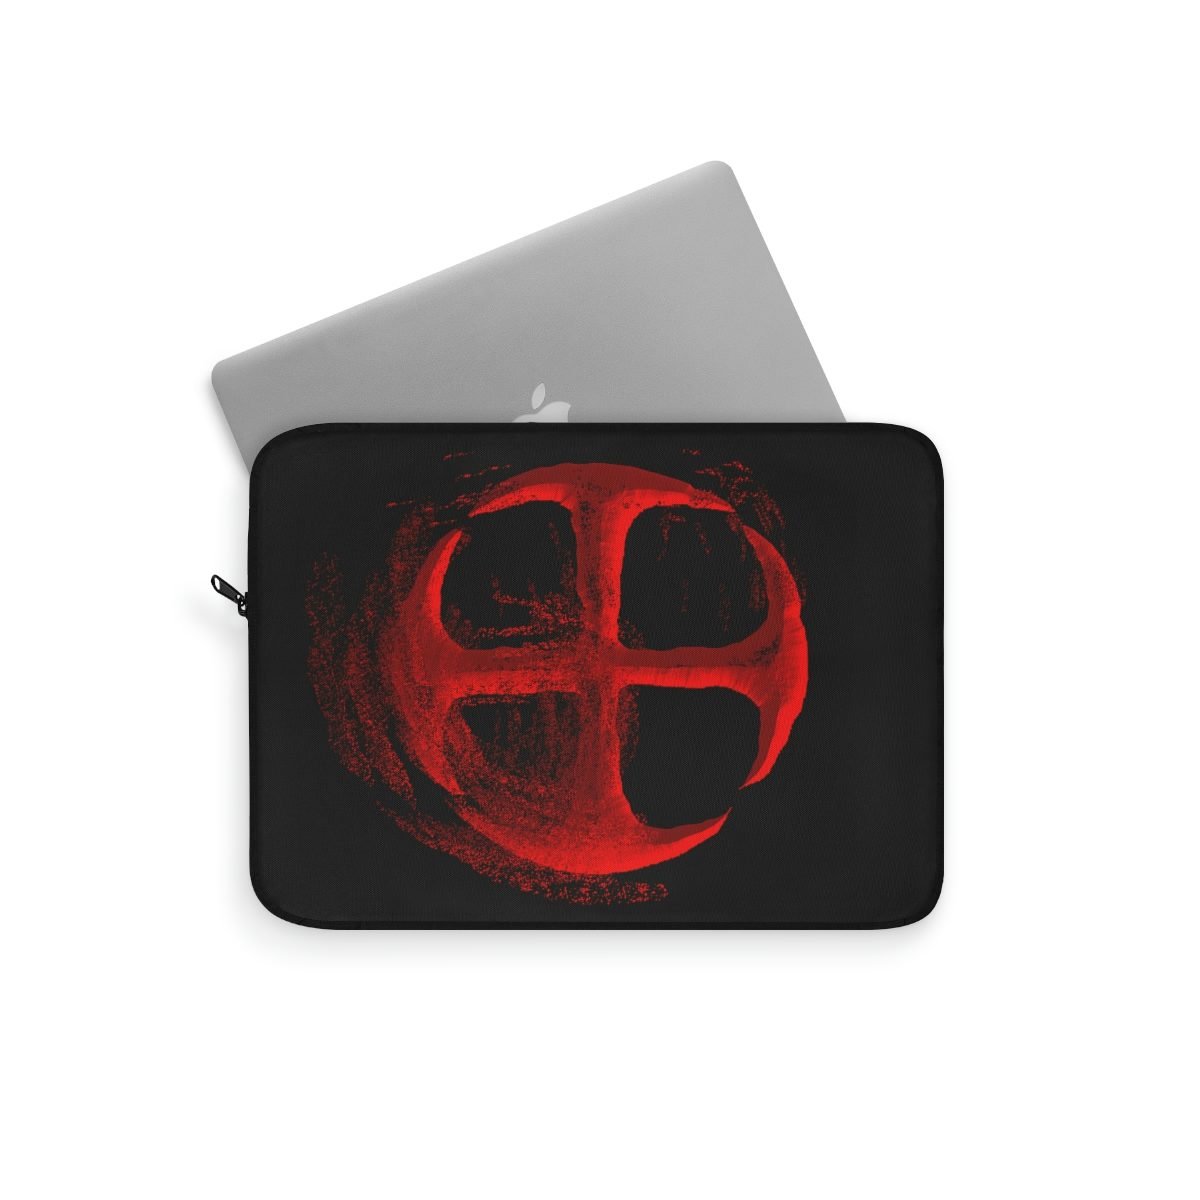 Deliverance Disintegrating Cross Laptop Sleeves (3 sizes)